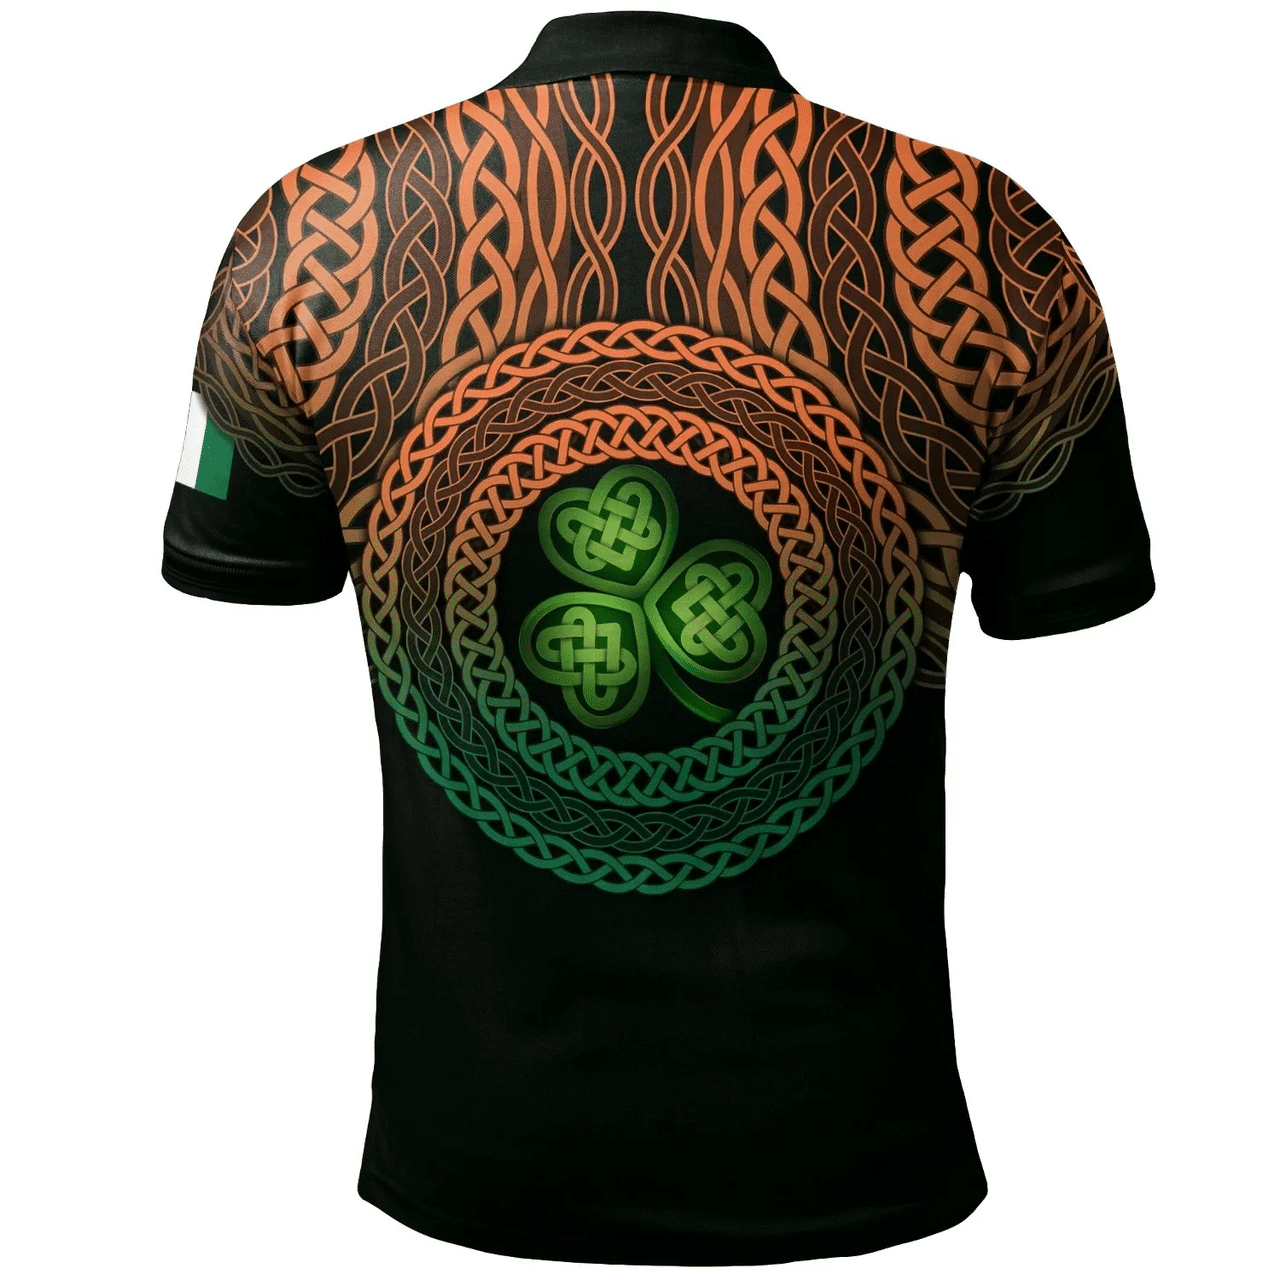 1stIreland Ireland Polo Shirt - Hara or O'Hara Irish Family Crest Polo Shirt - Celtic Pride A7 | 1stIreland.com